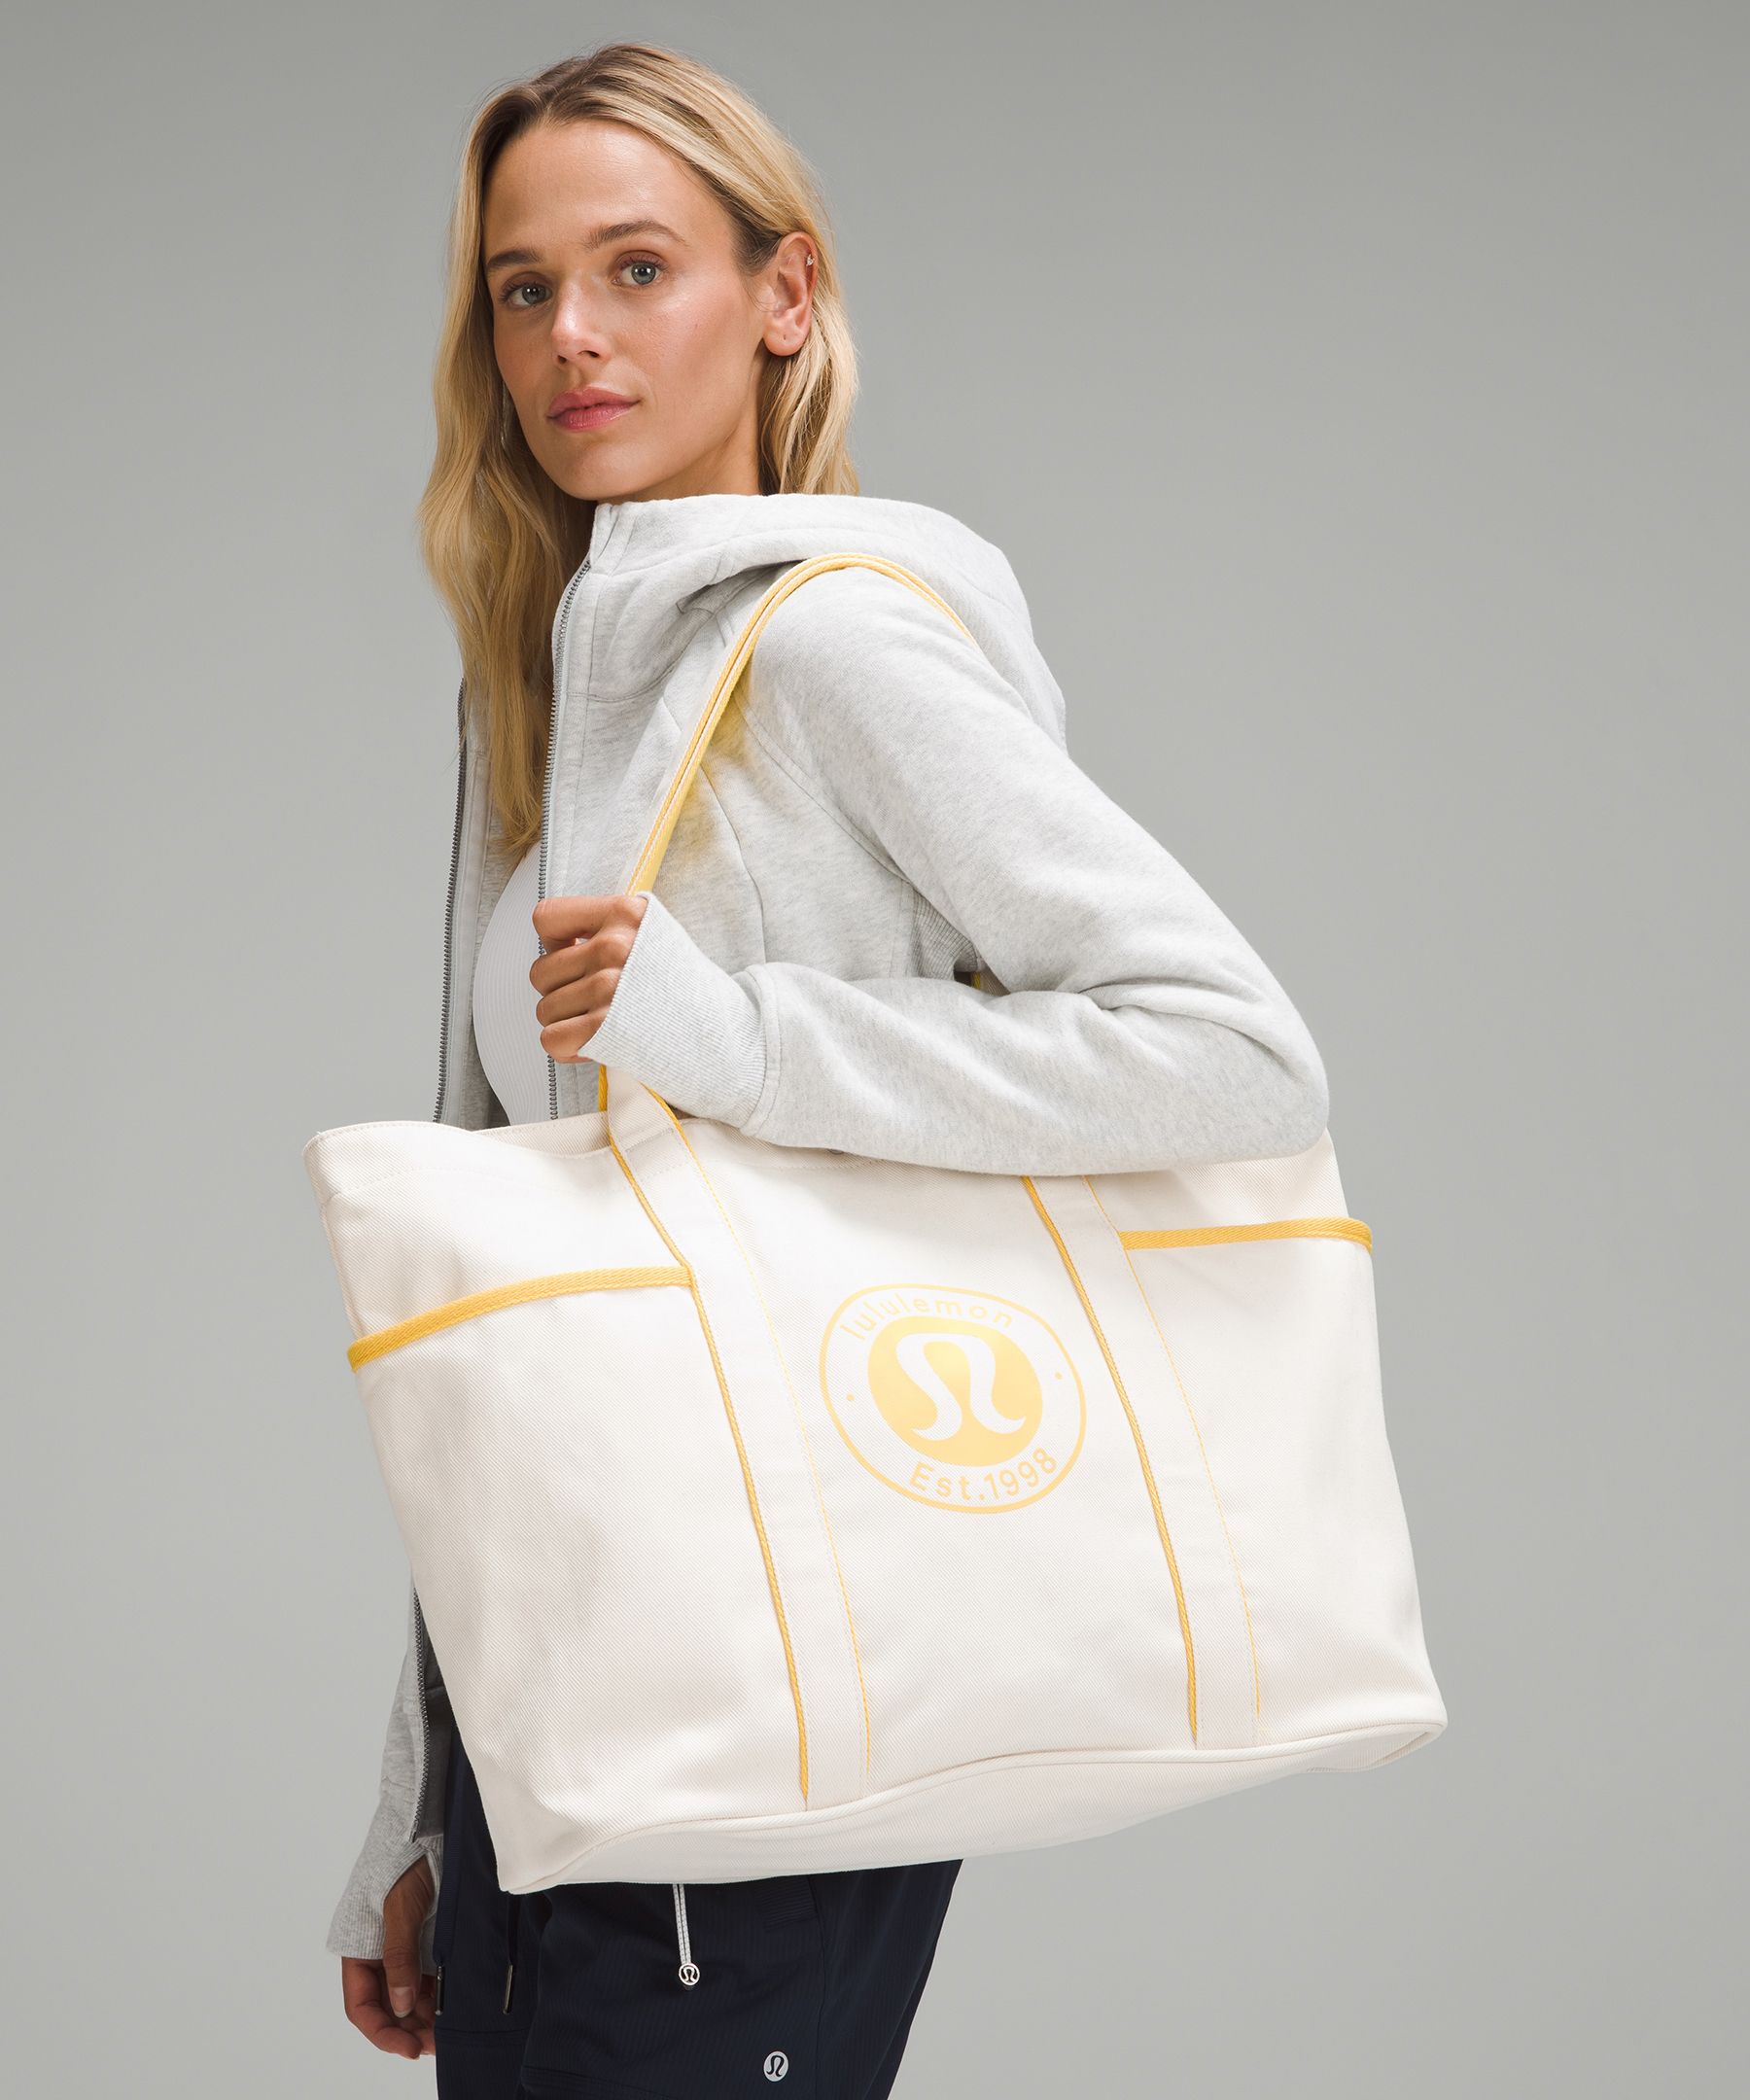 🍋 lululemon reusable tote bags small and medium